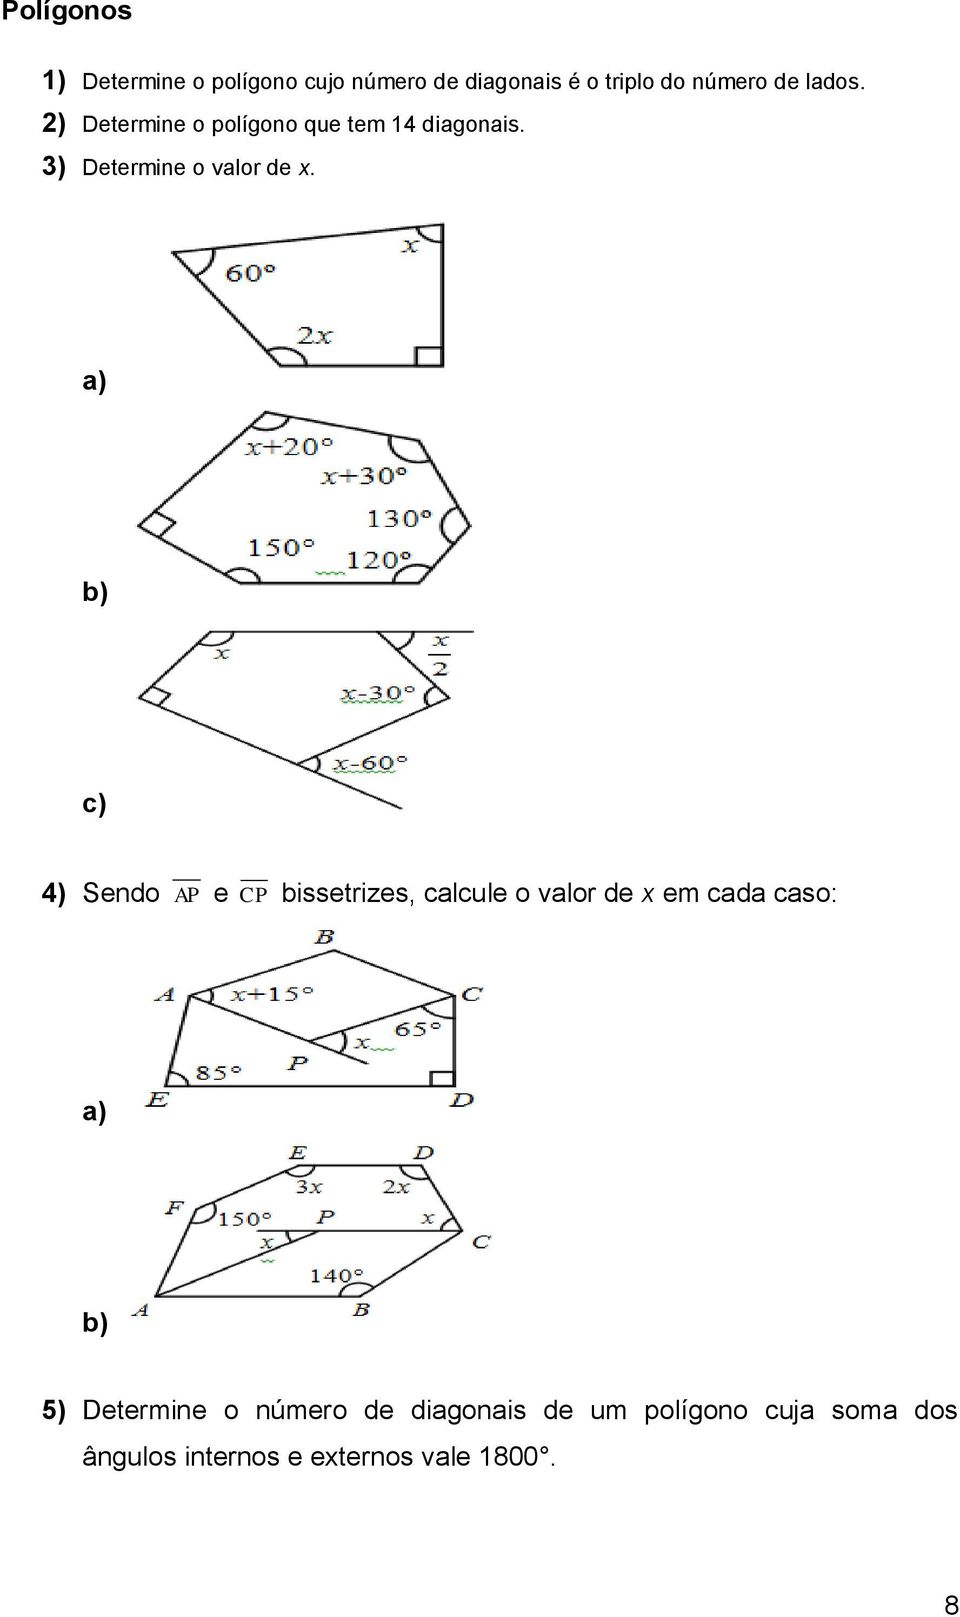 a) b) c) 4) Sndo AP CP bisstrizs calcul o valor d x m cada caso: a) b) 5)